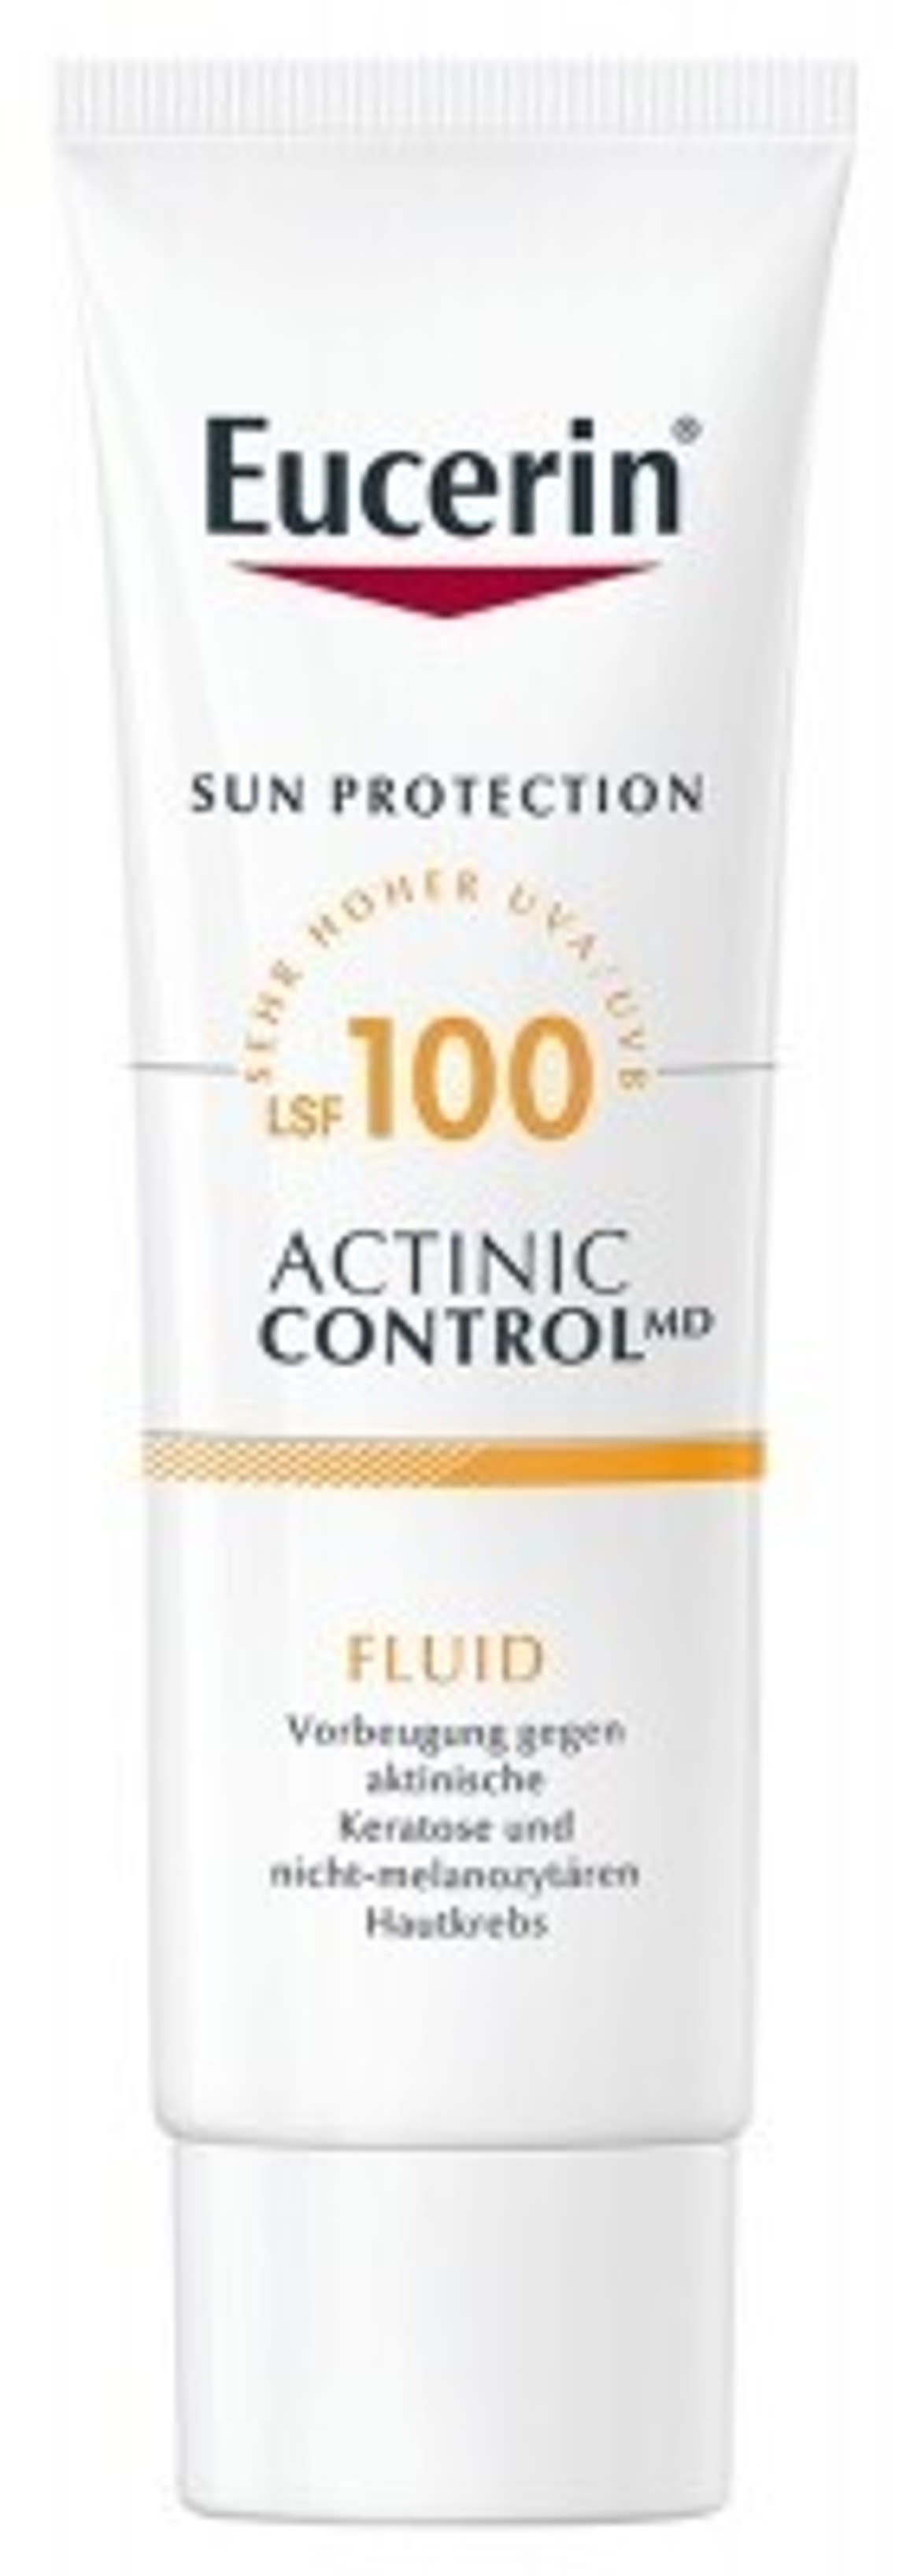 Eucerin Sun Actinic Control MD FF100 napozó fluid